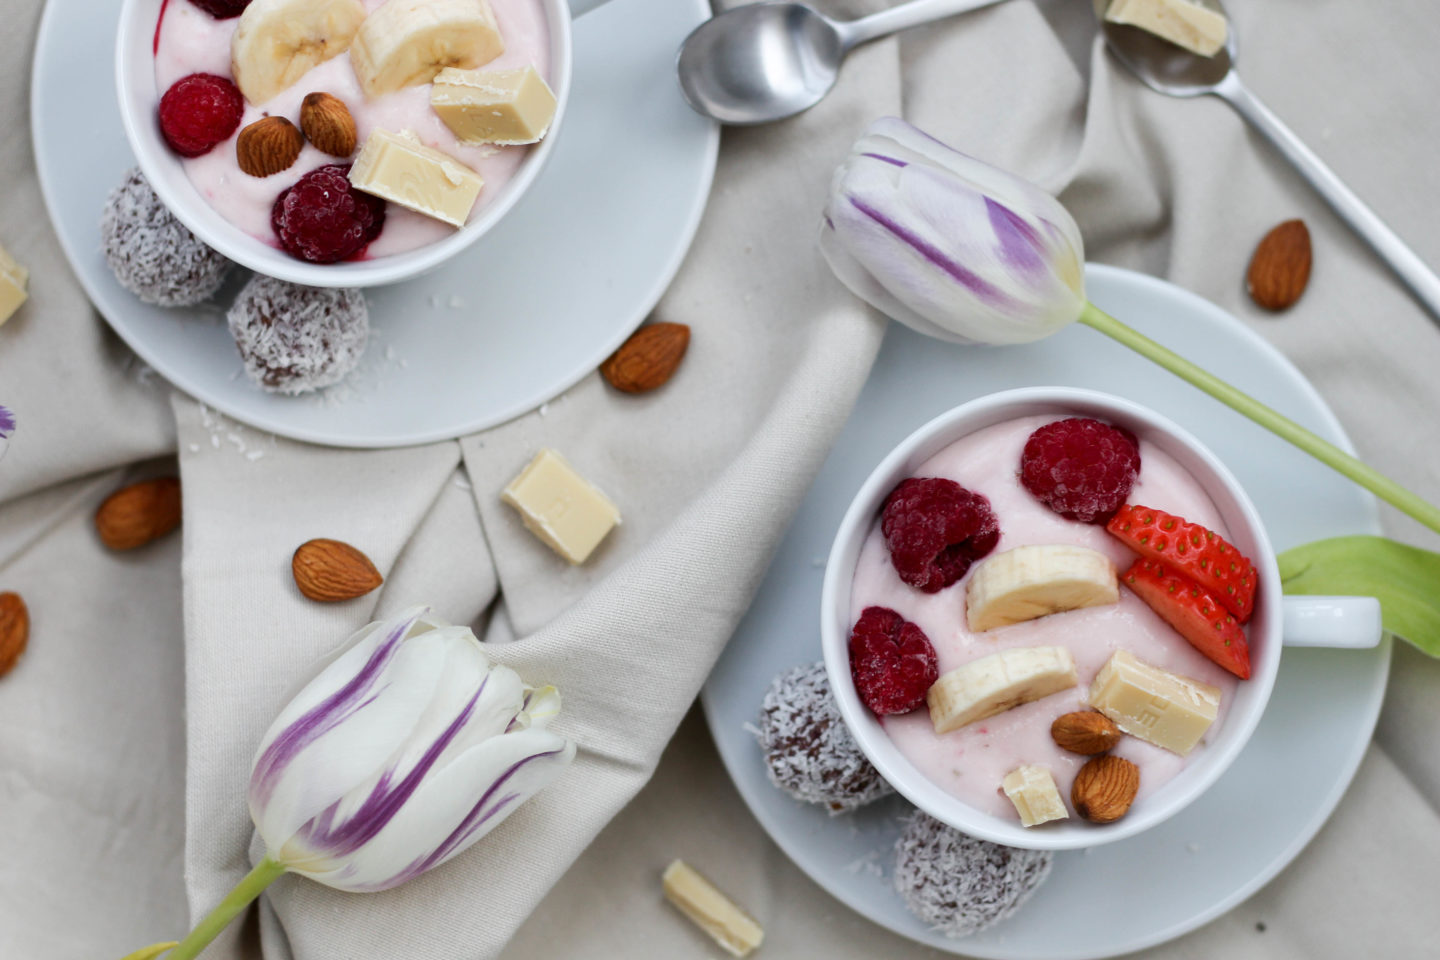 Dein Homespa - Vegan - Plantbased - Healthy - Lifestyle - Relax - Soultime - Smoothie - Bowl - Yoghurt